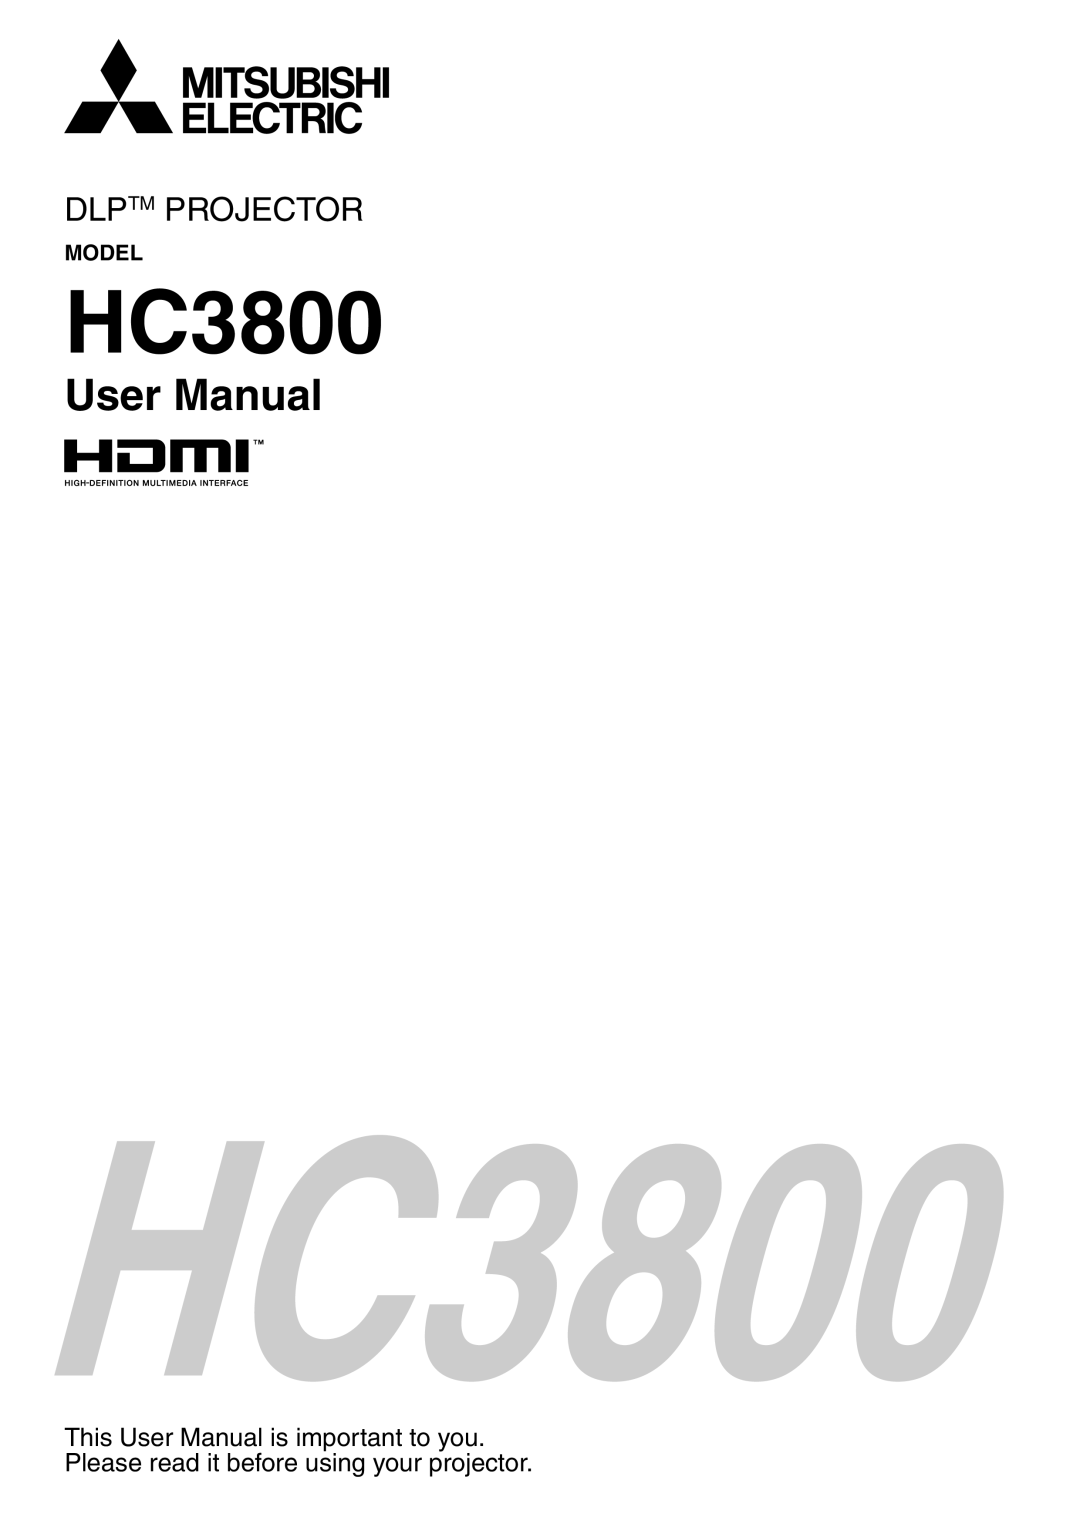 Mitsubishi Electronics HC3800 user manual Model, User Manual, Dlptm Projector 